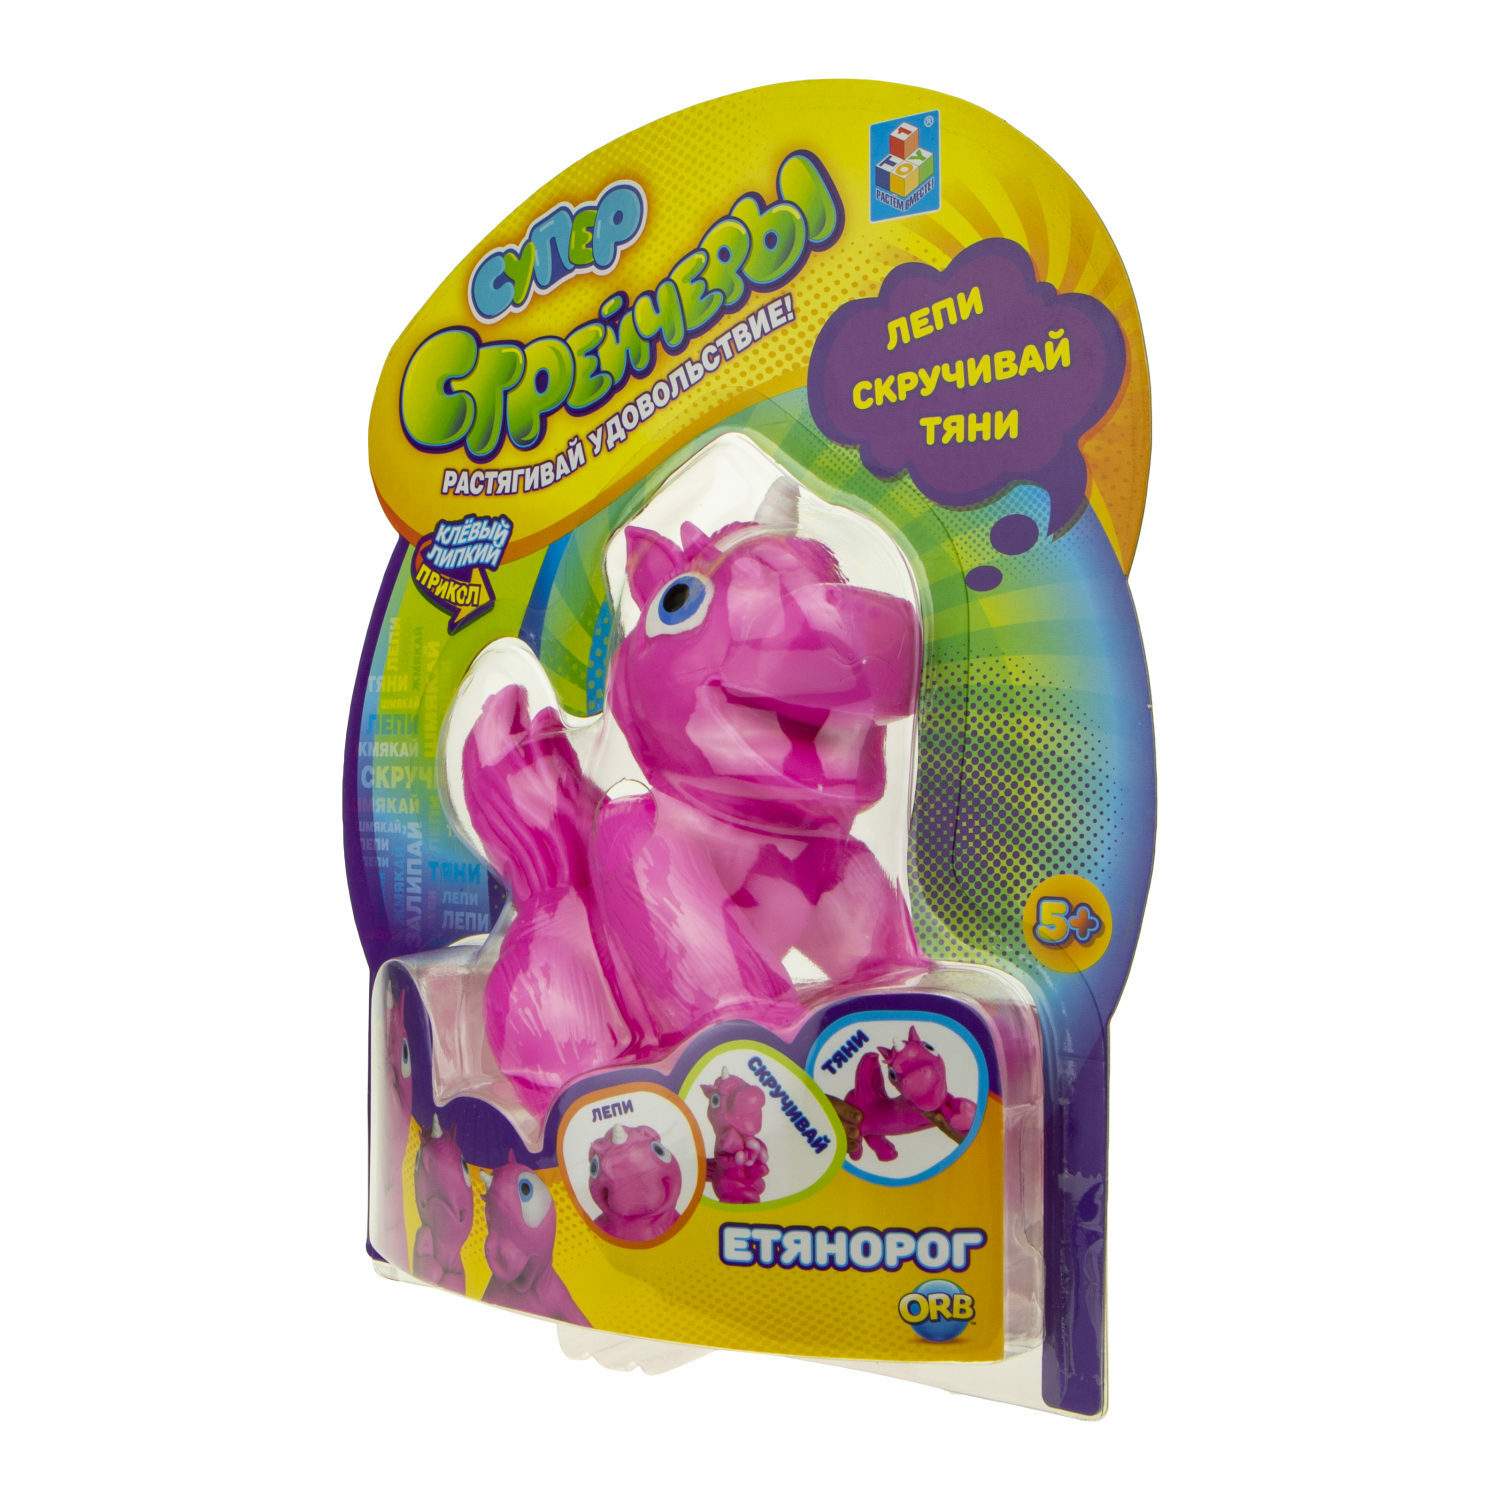 Фигурка Супер стрейчеры Етянорог тянущаяся игрушка блистер 16см розовый - фото 6